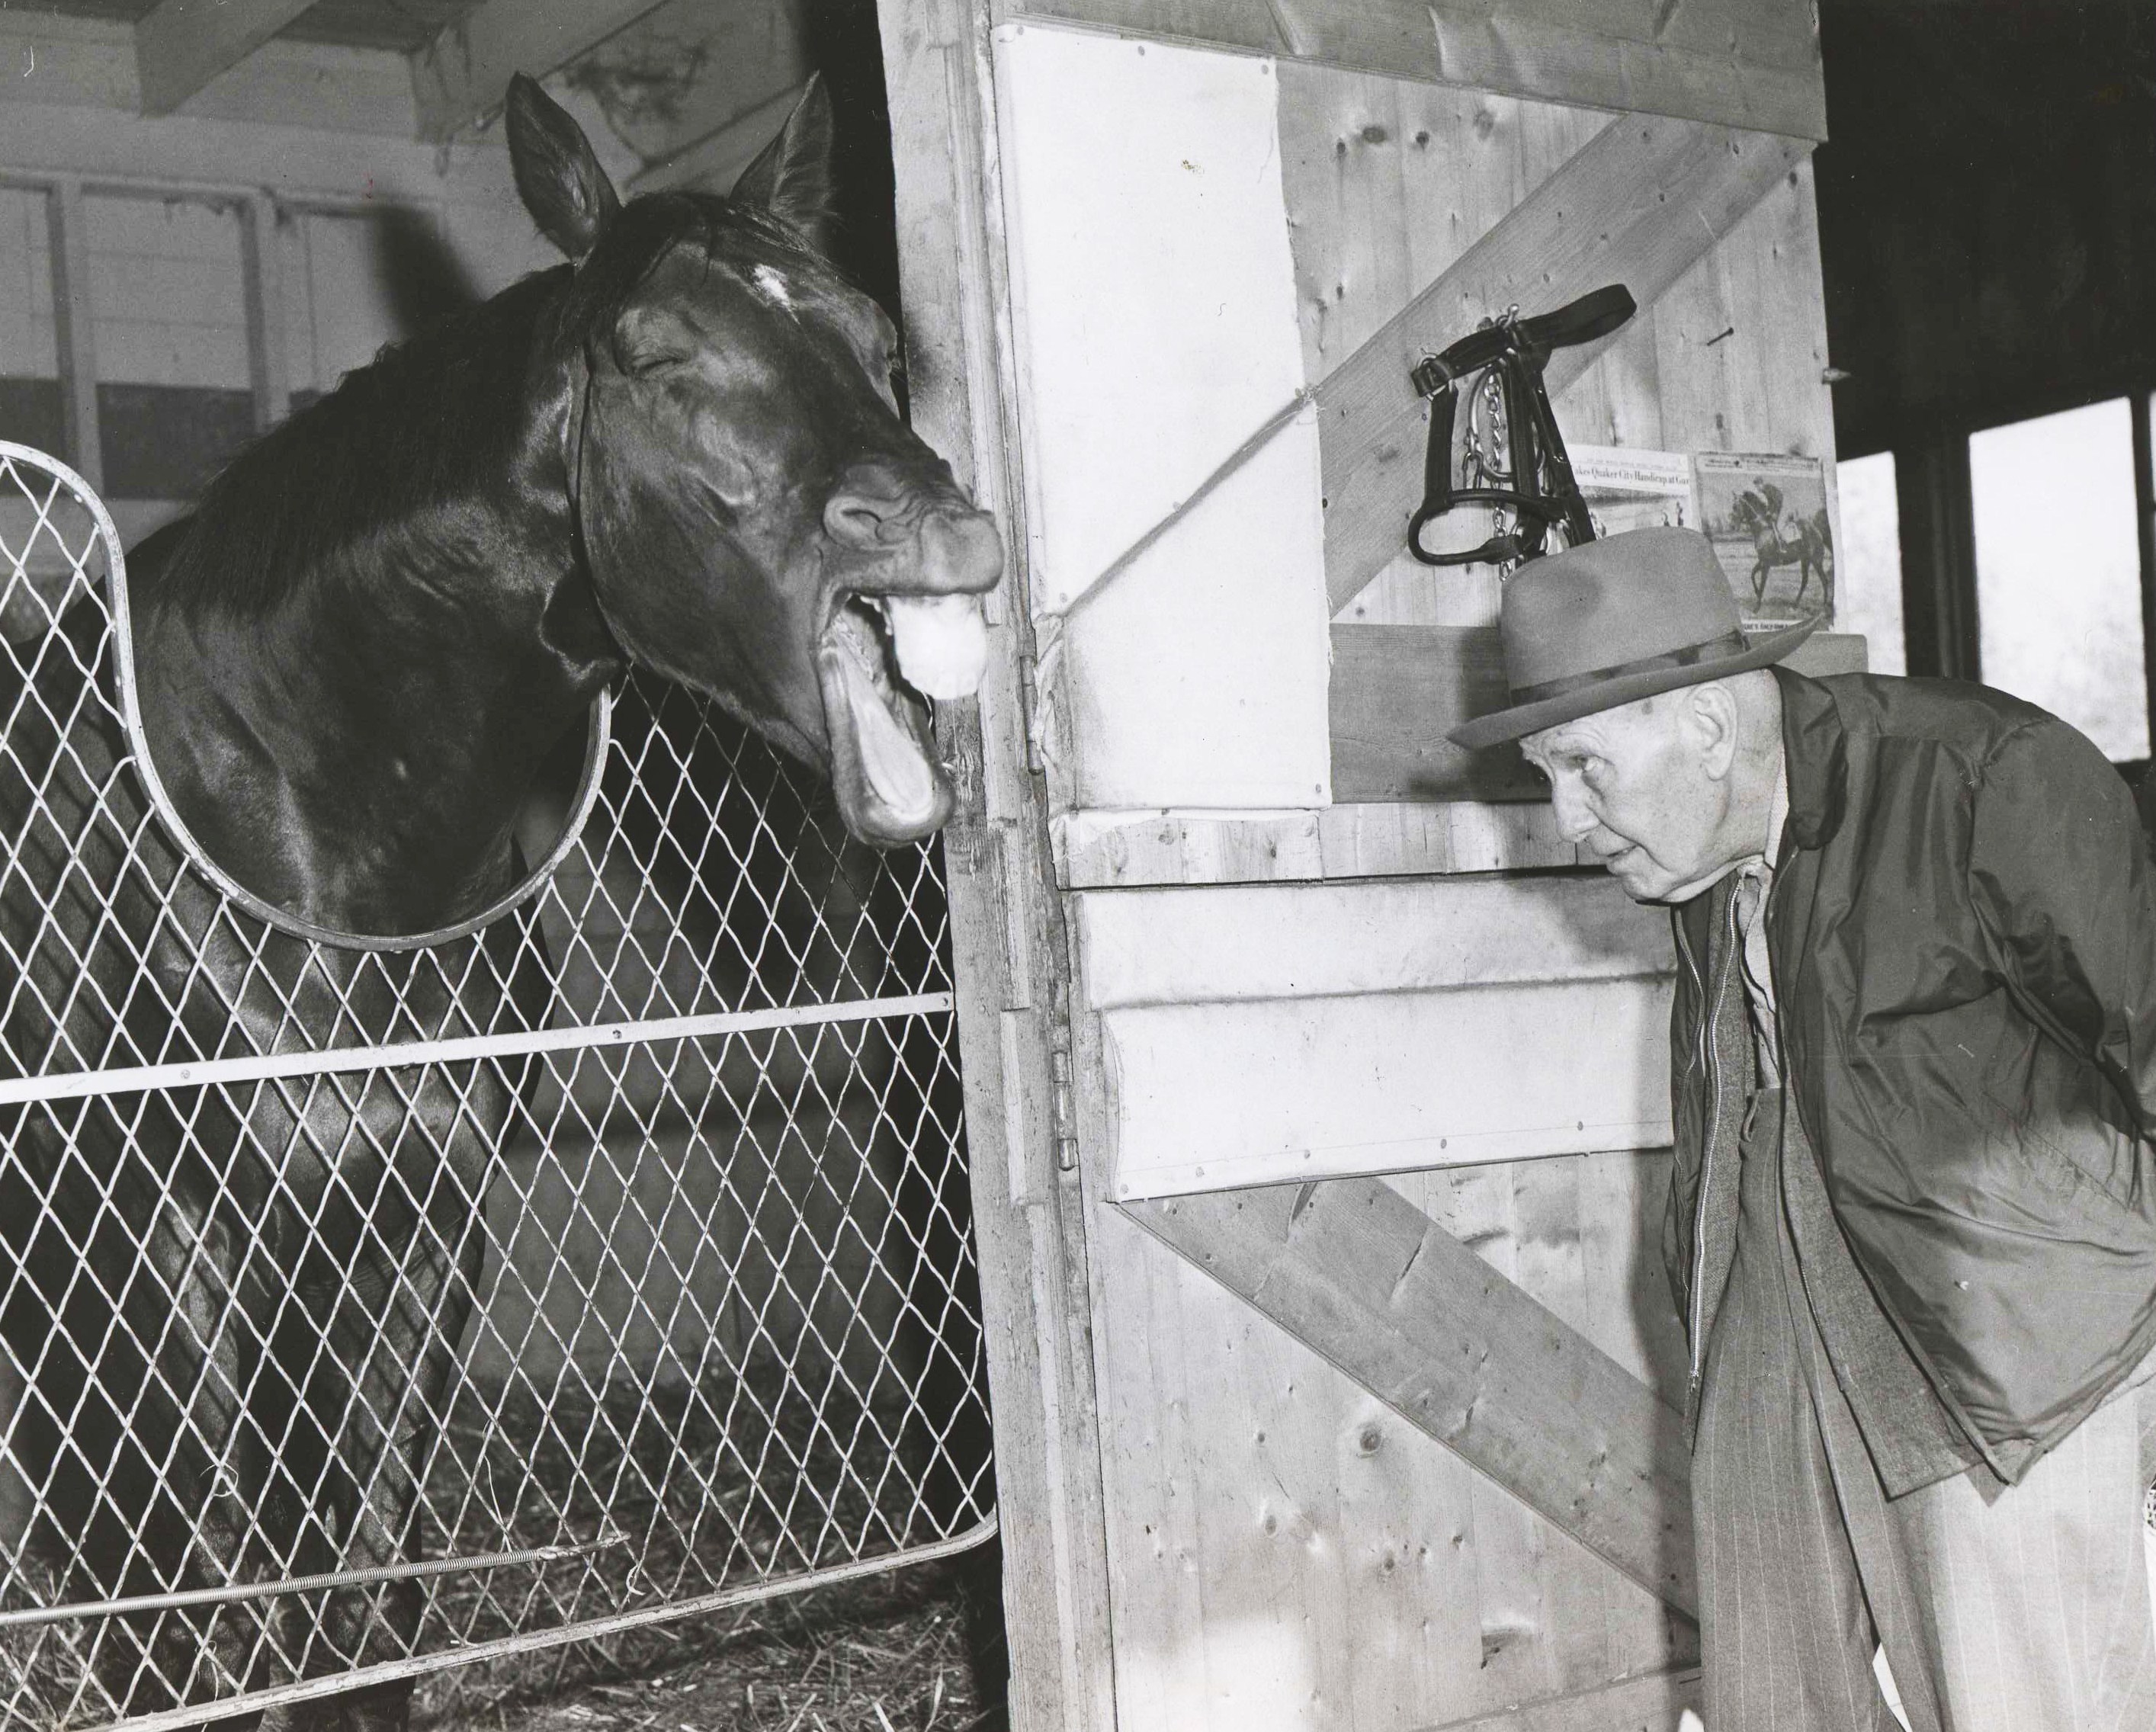 Nashua and James "Sunny Jim" Fitzsimmons having a talk in the barn area at Aqueduct, October 1956 (Bert and Richard Morgan/Museum Collection)